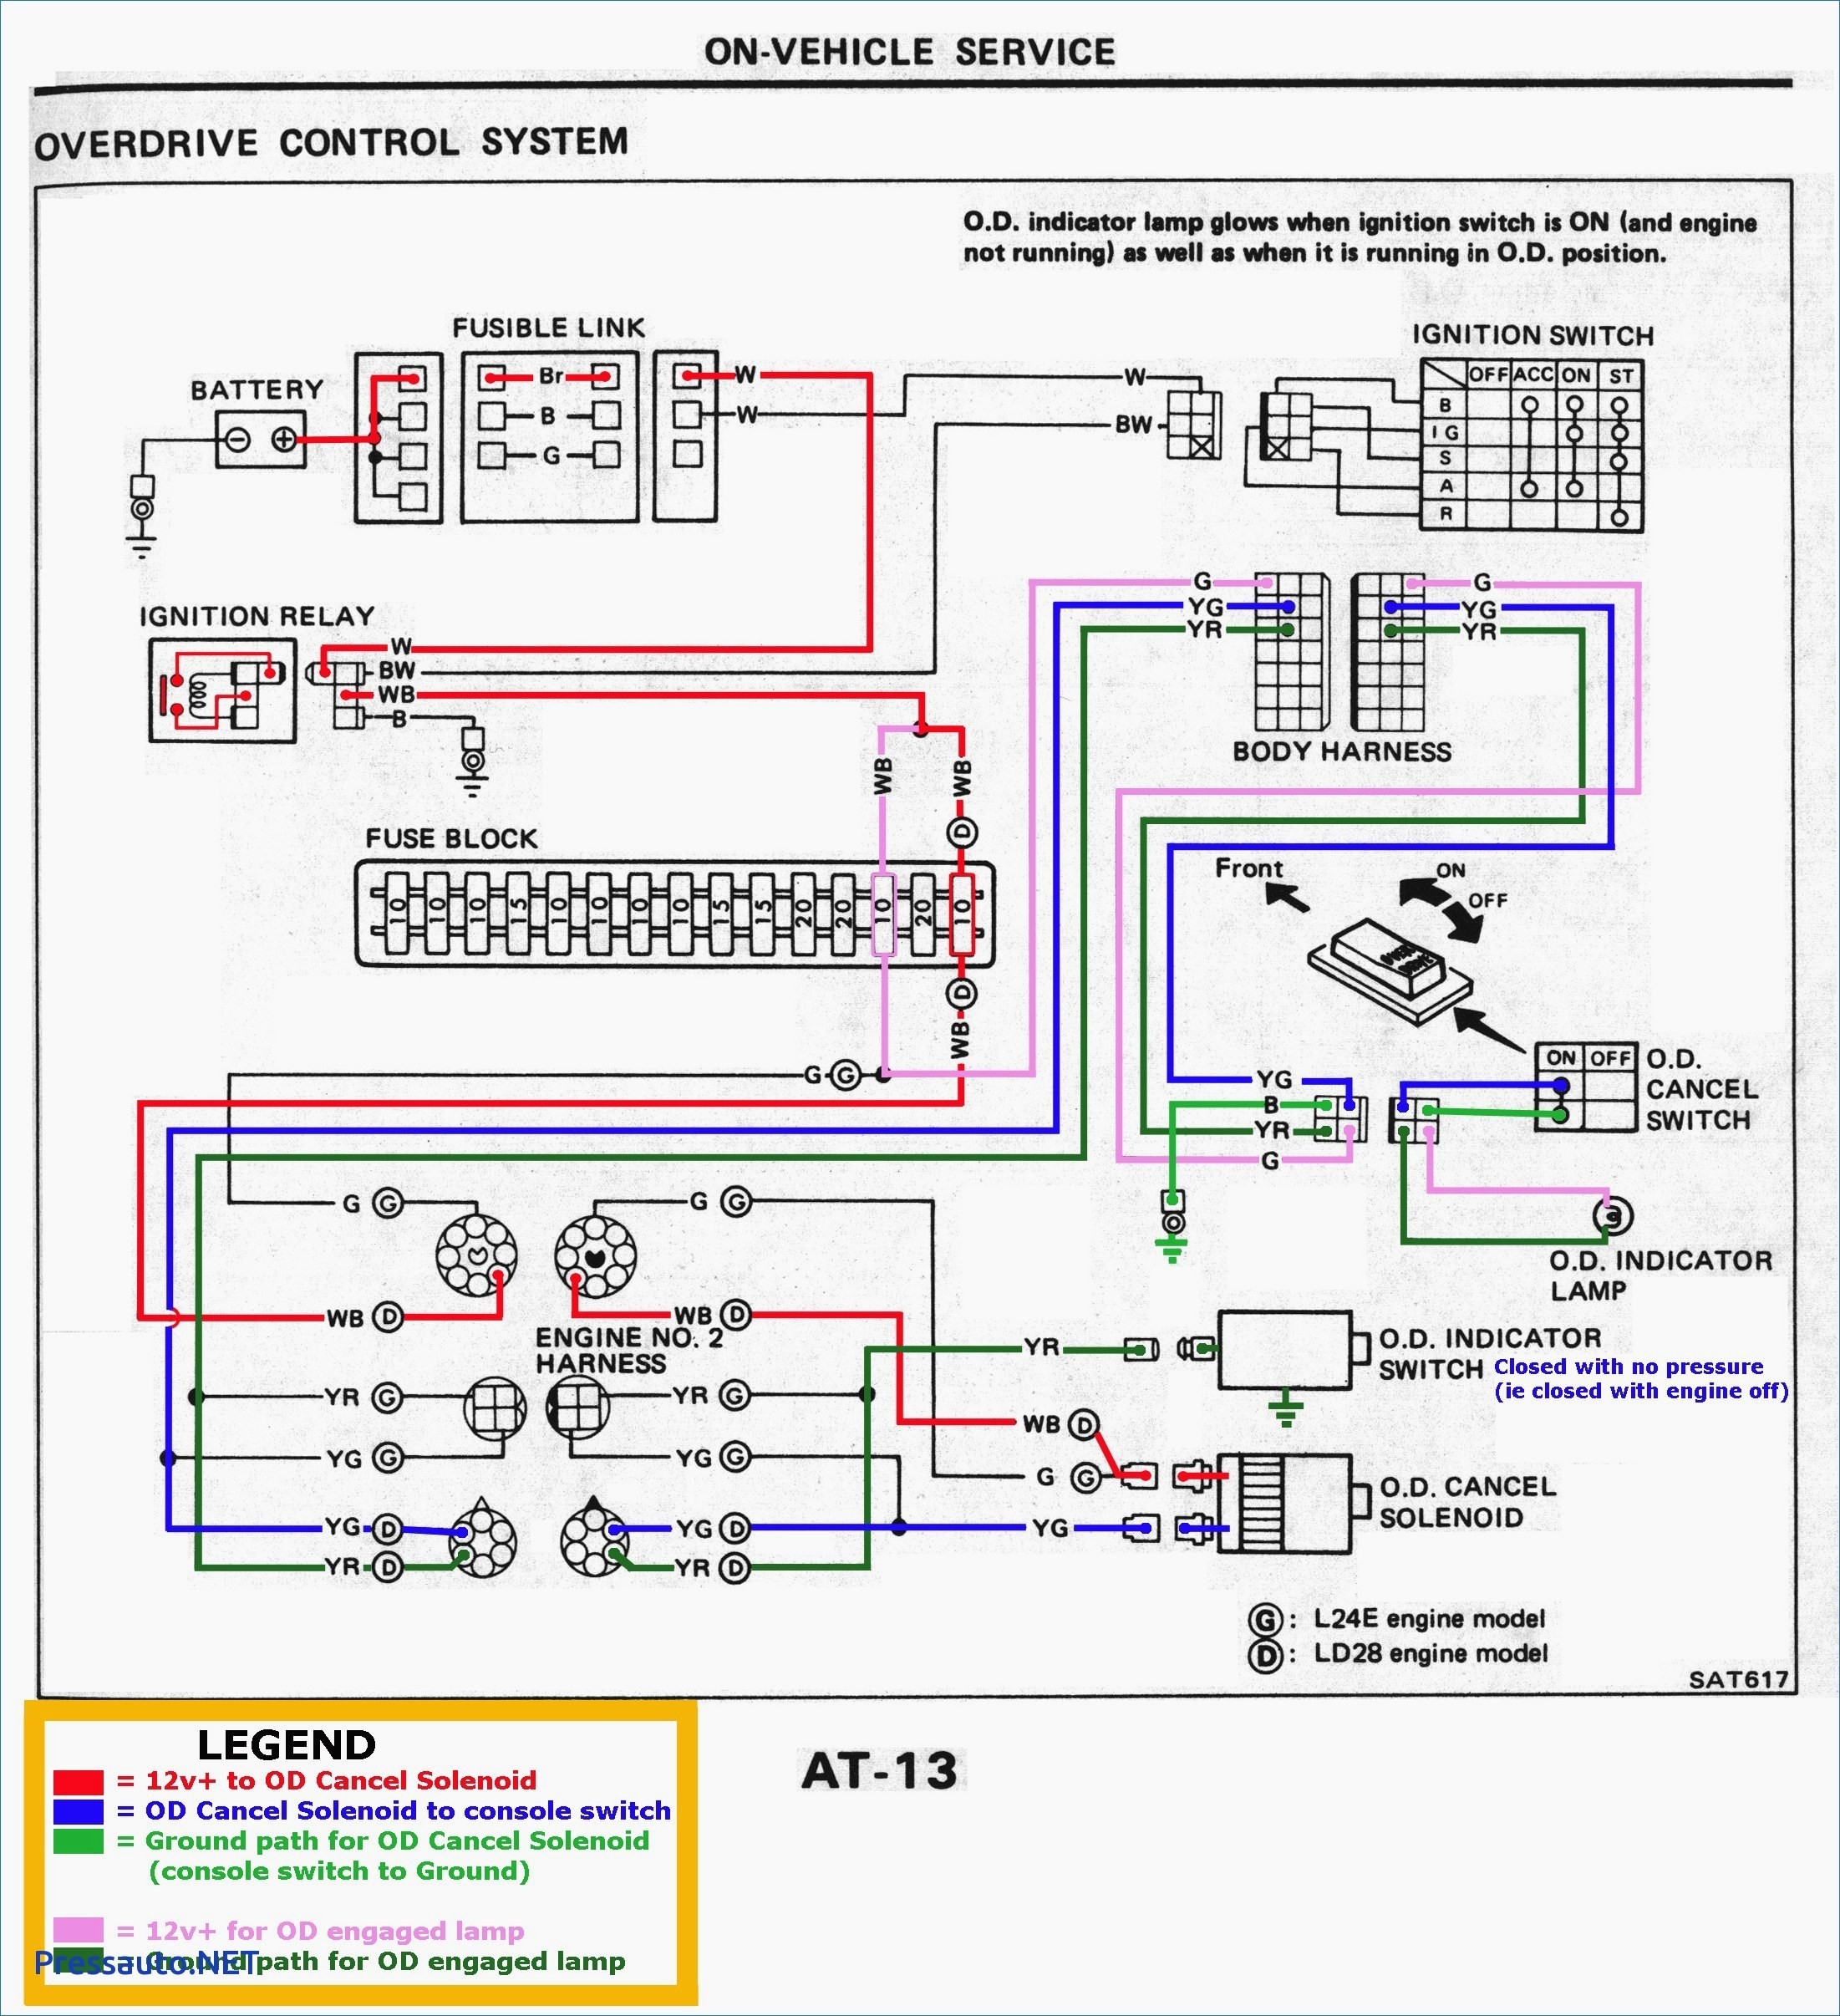 Kohler Engine Ignition Wiring Diagram Mazda Coil Wiring Wiring Diagram Of Kohler Engine Ignition Wiring Diagram